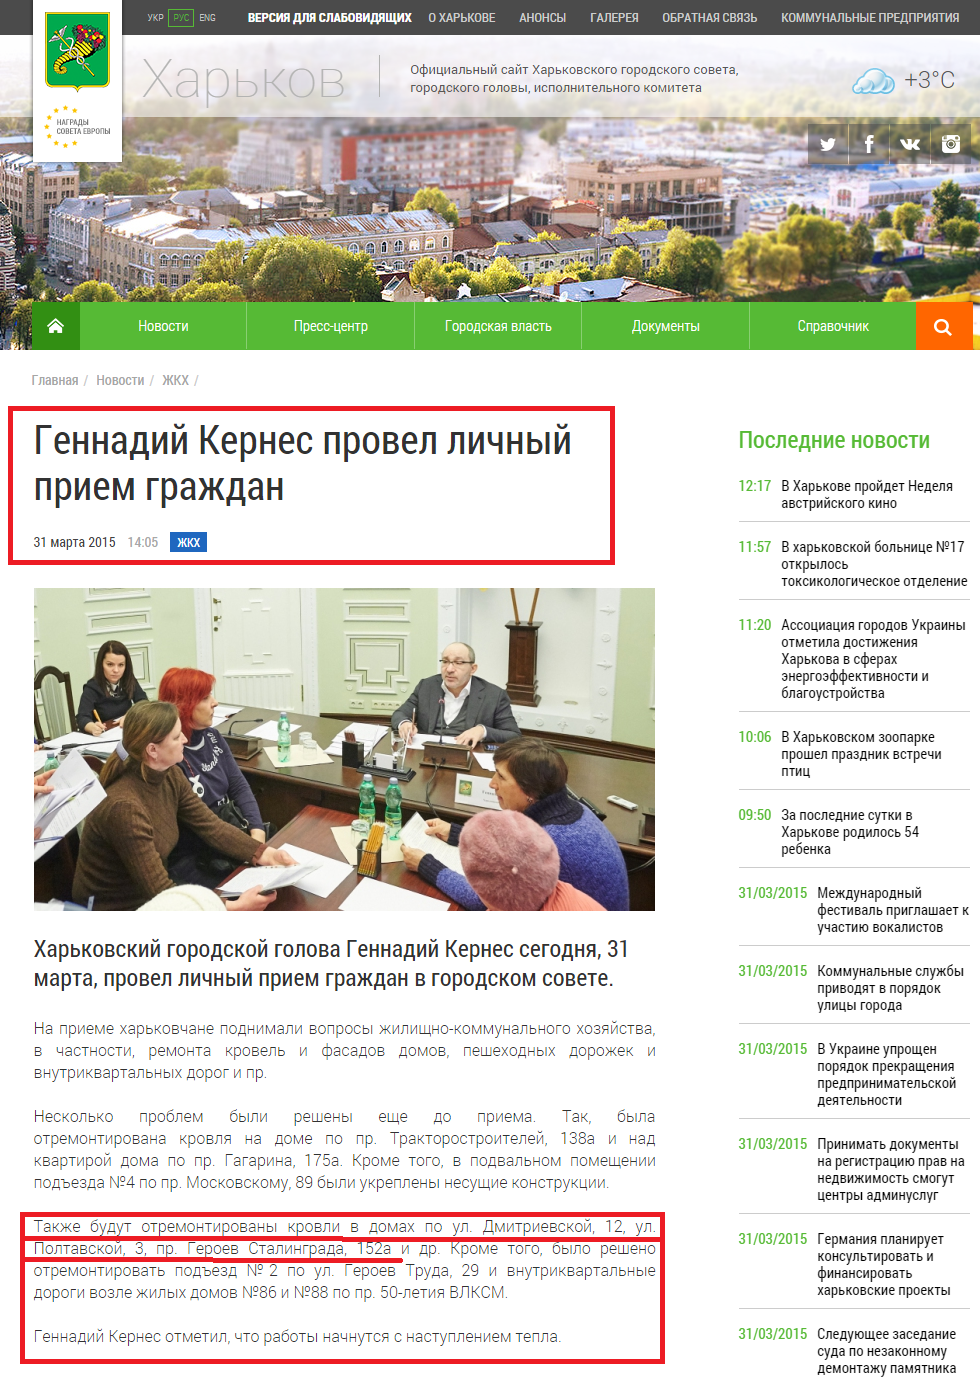 http://www.city.kharkov.ua/ru/news/gennadiy-kernes-proviv-osobistiy-priyom-gromadyan-27467.html